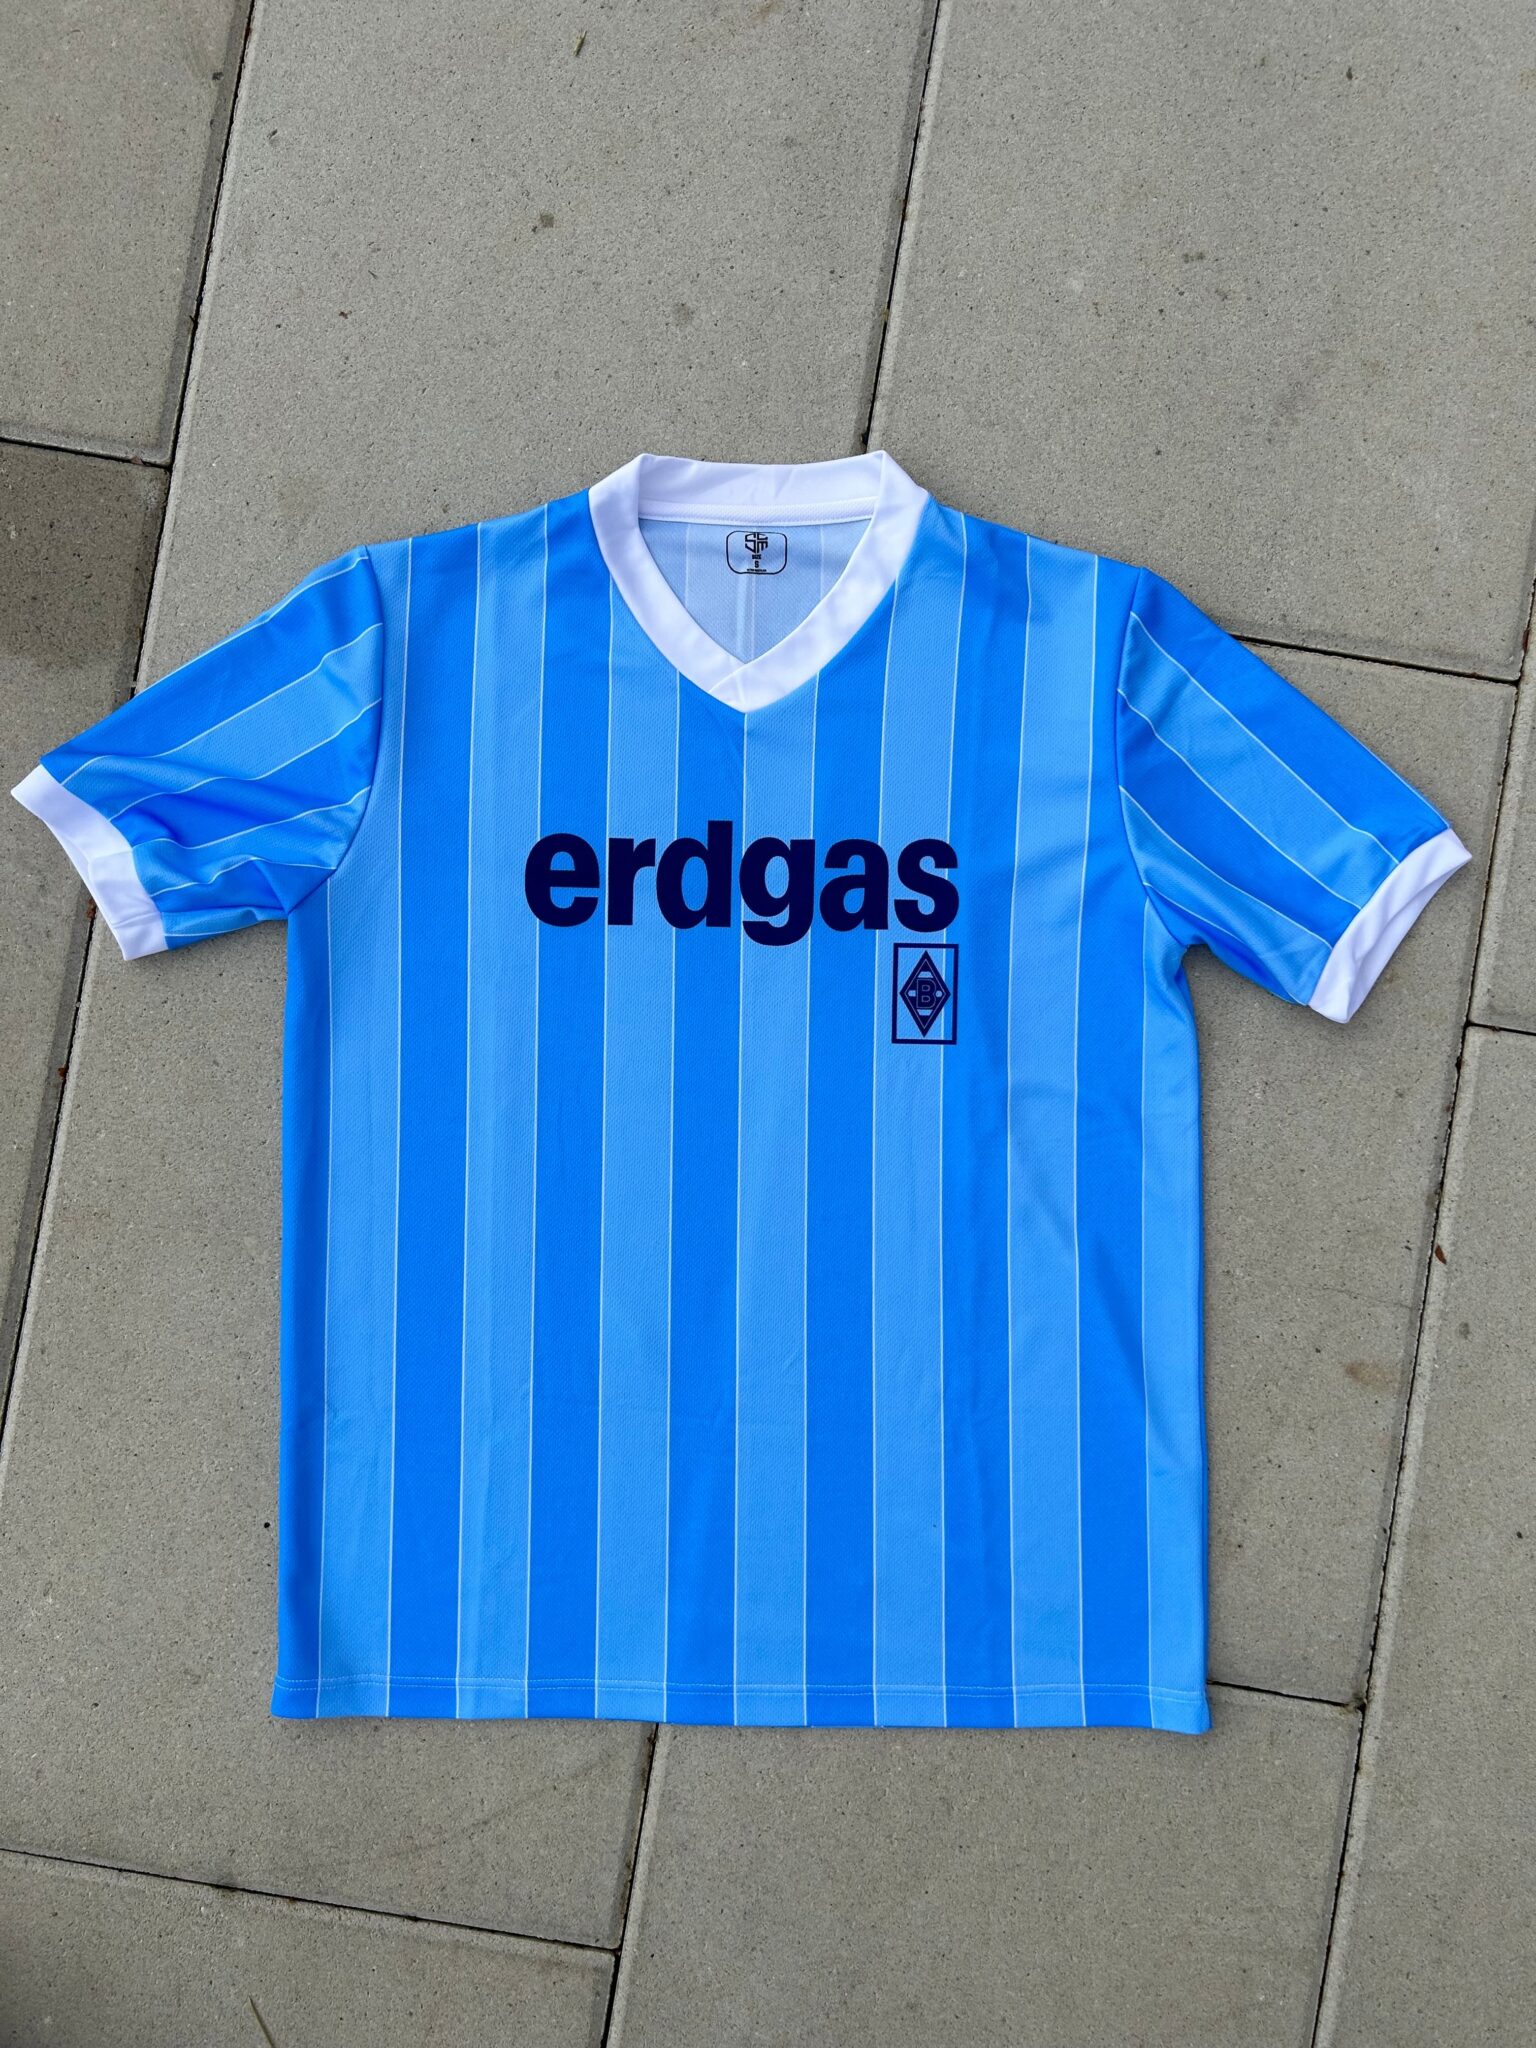 Borussia Mönchengladbach Home Retro Trikot "Ergdas" 1987 UEFA-Cup Jersey Vintage Shirt - Sport Club Memories